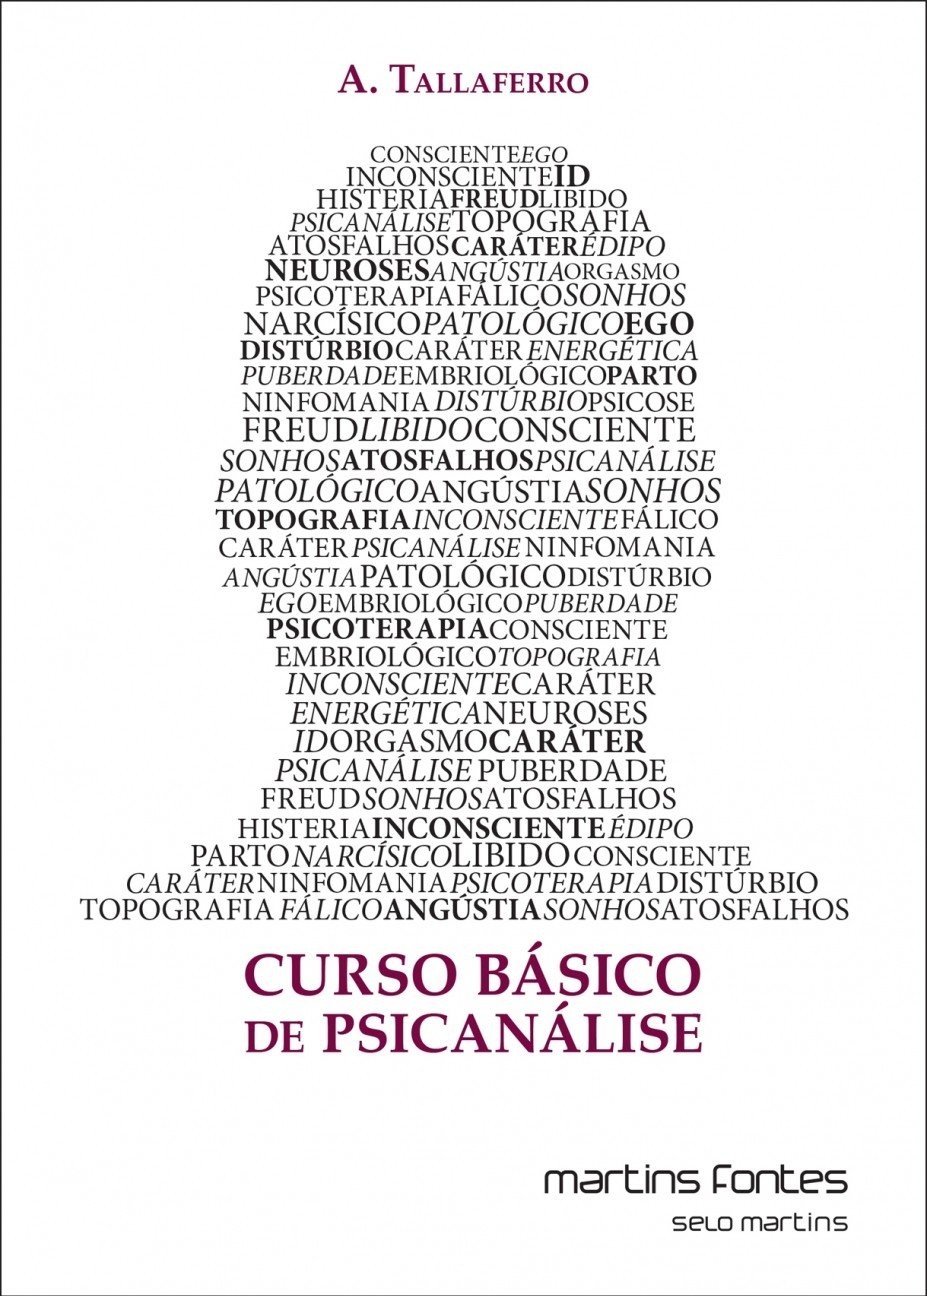 CURSO BASICO DE PSICANALISE